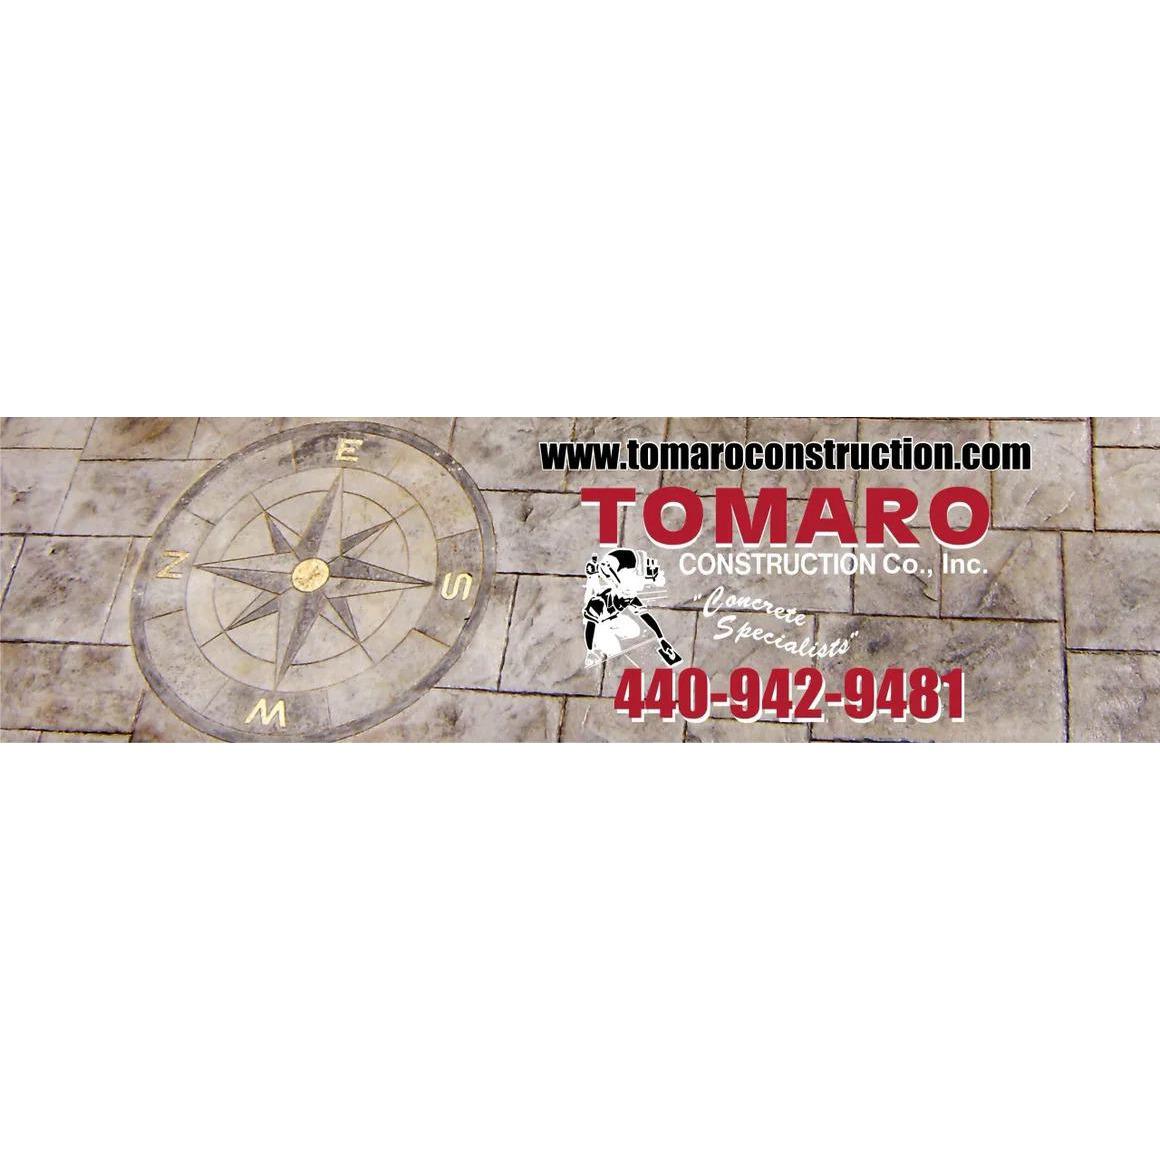 Tomaro Construction Co., Inc.